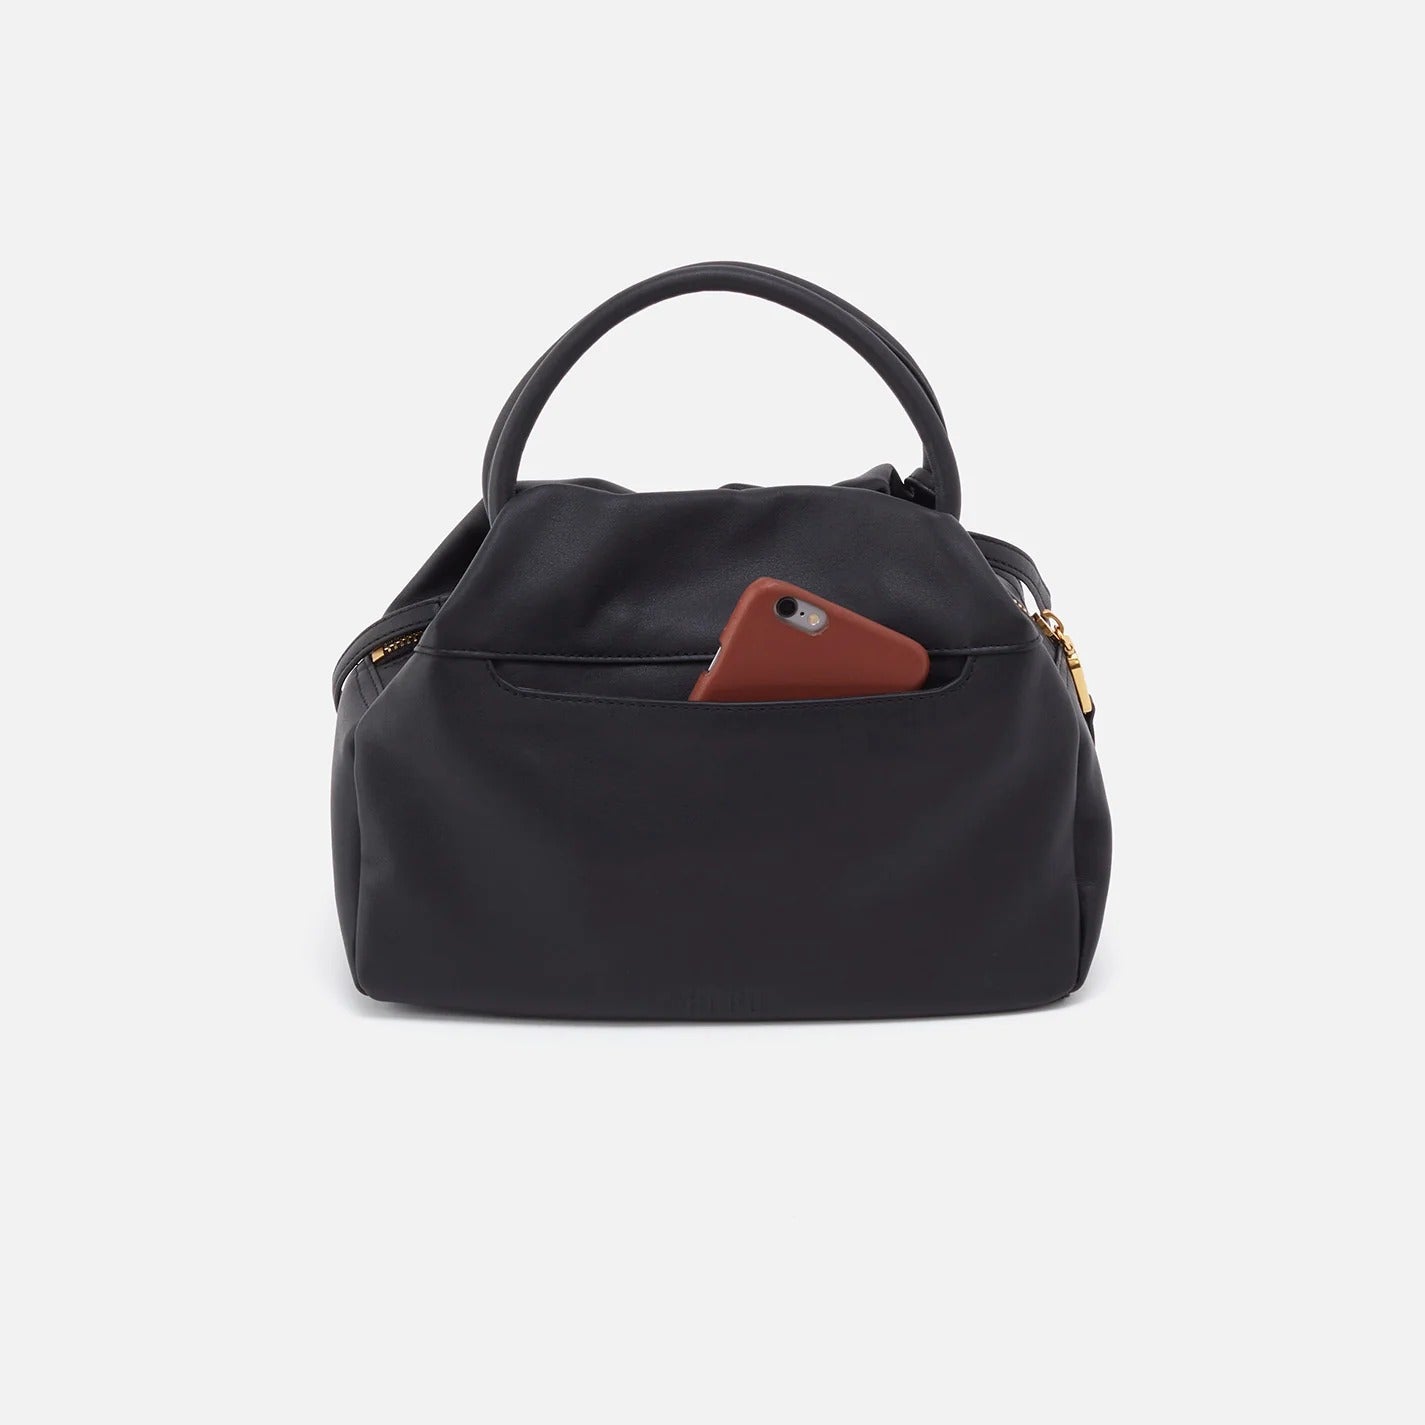 DARLING Small Satchel Handbag Silk Napa Leather Black